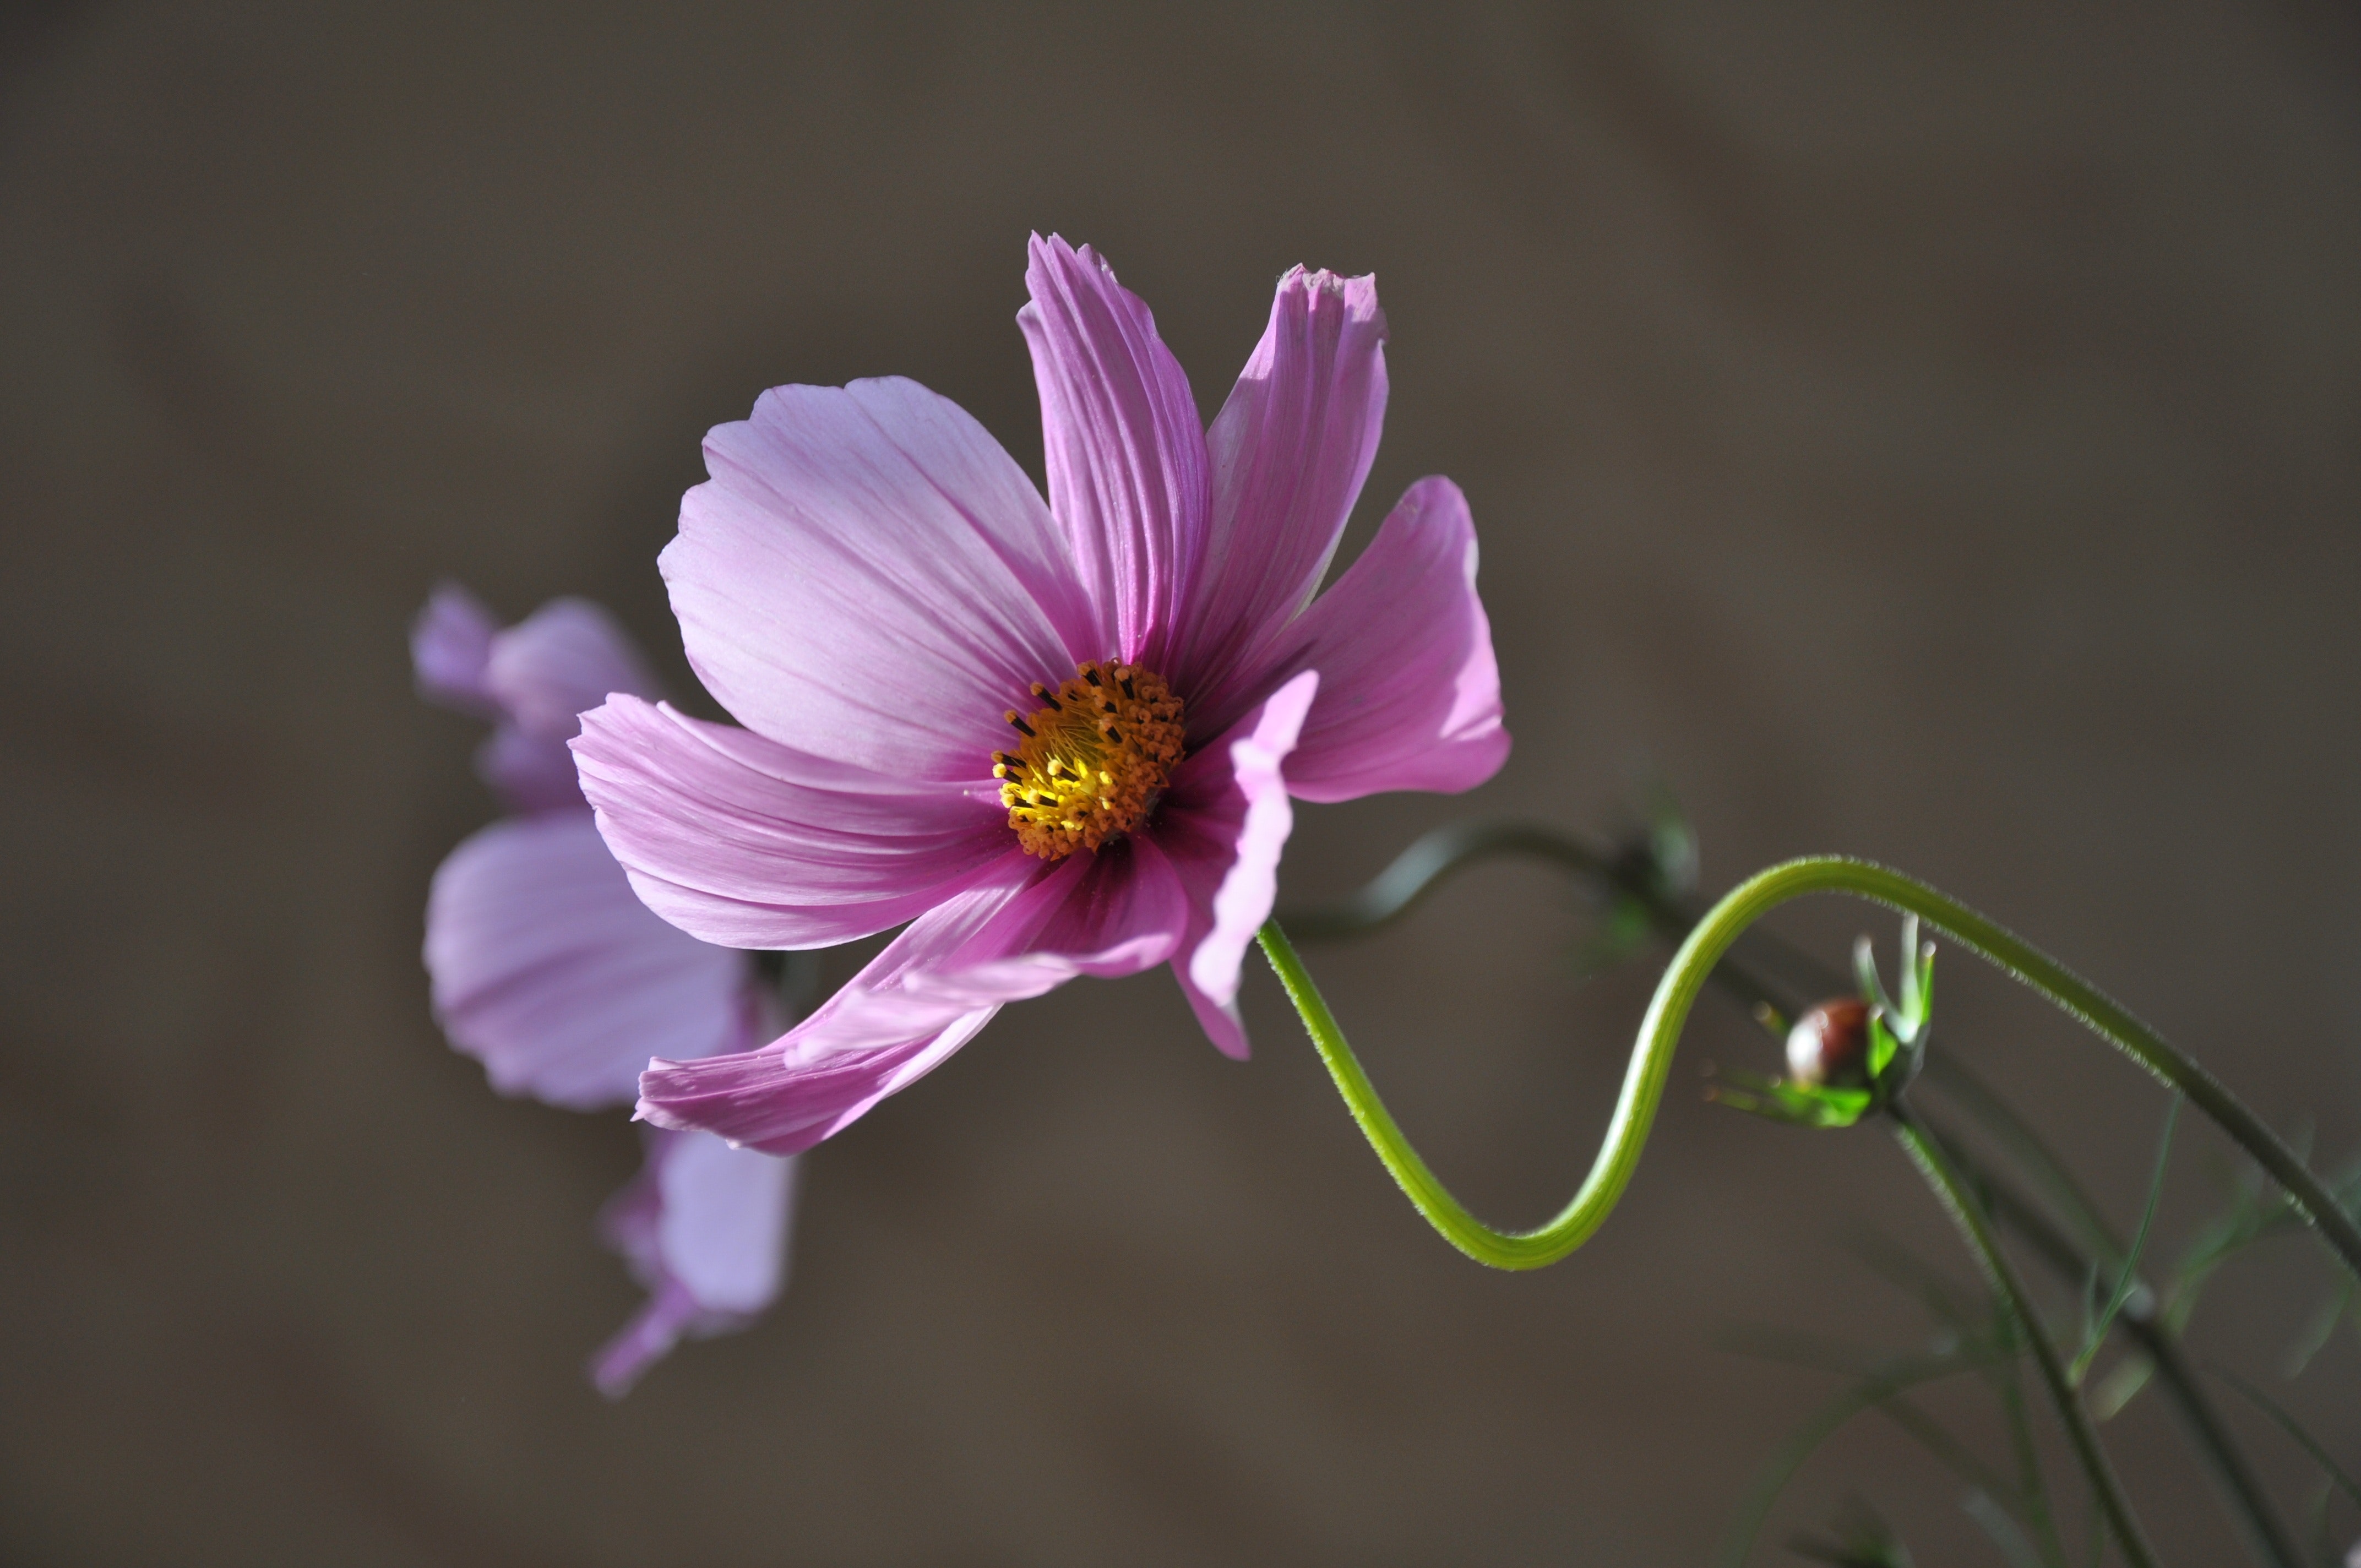 Purple flower during daytime photo